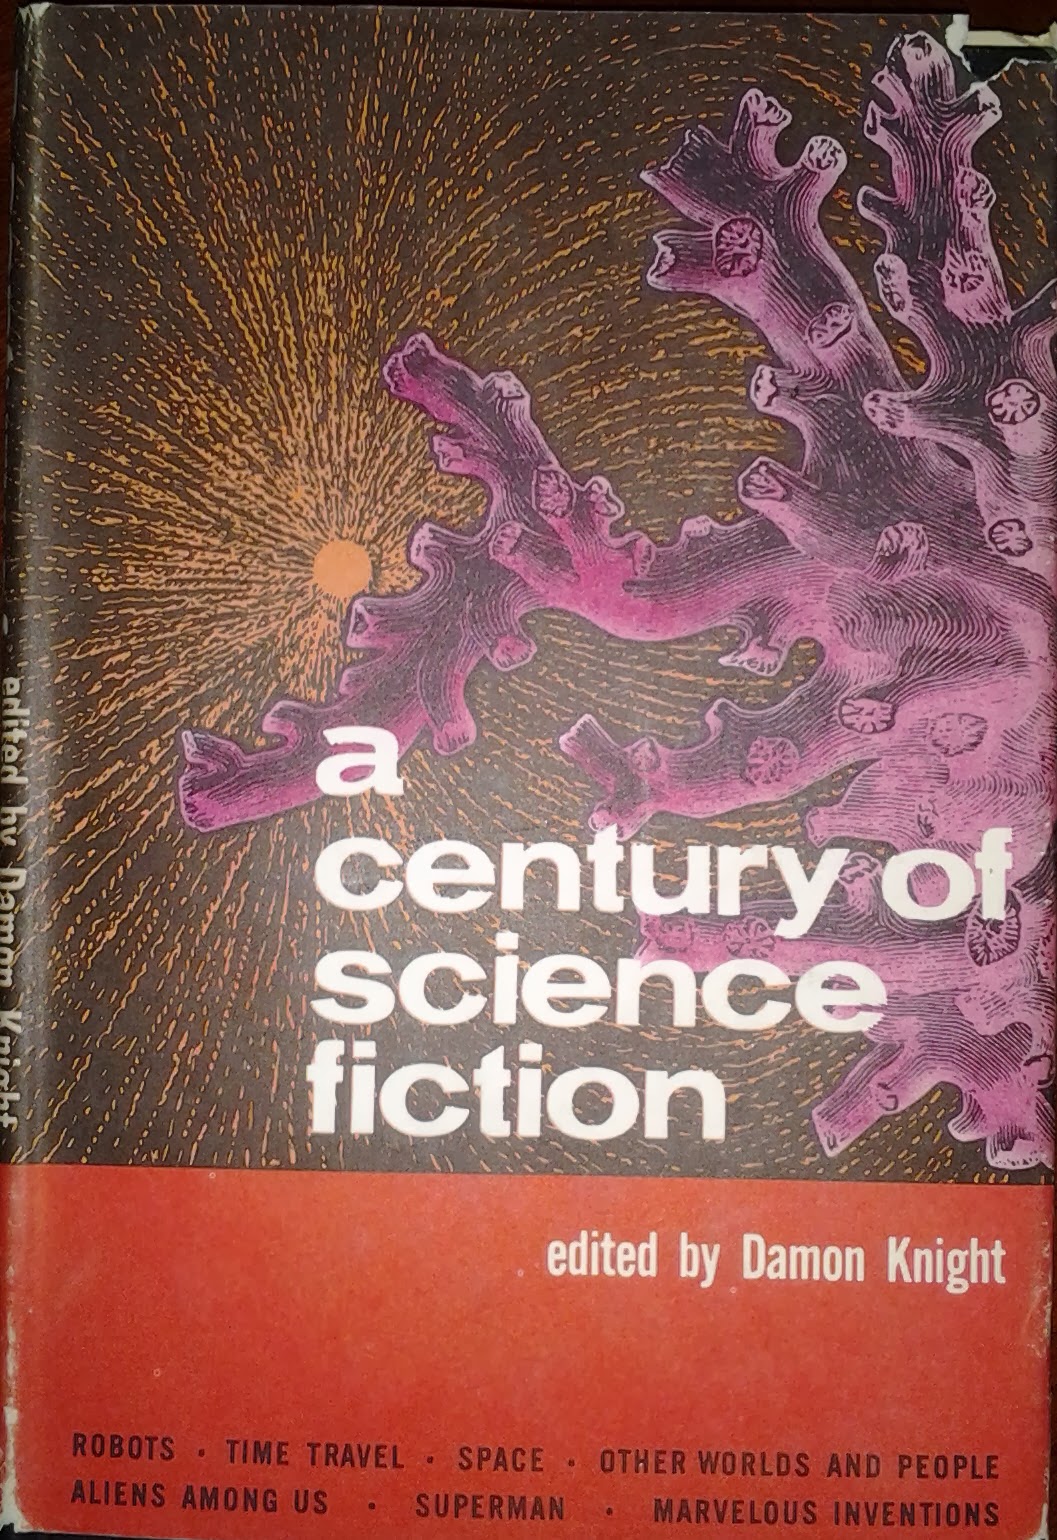 Damon Knight - A Century of Science Fiction